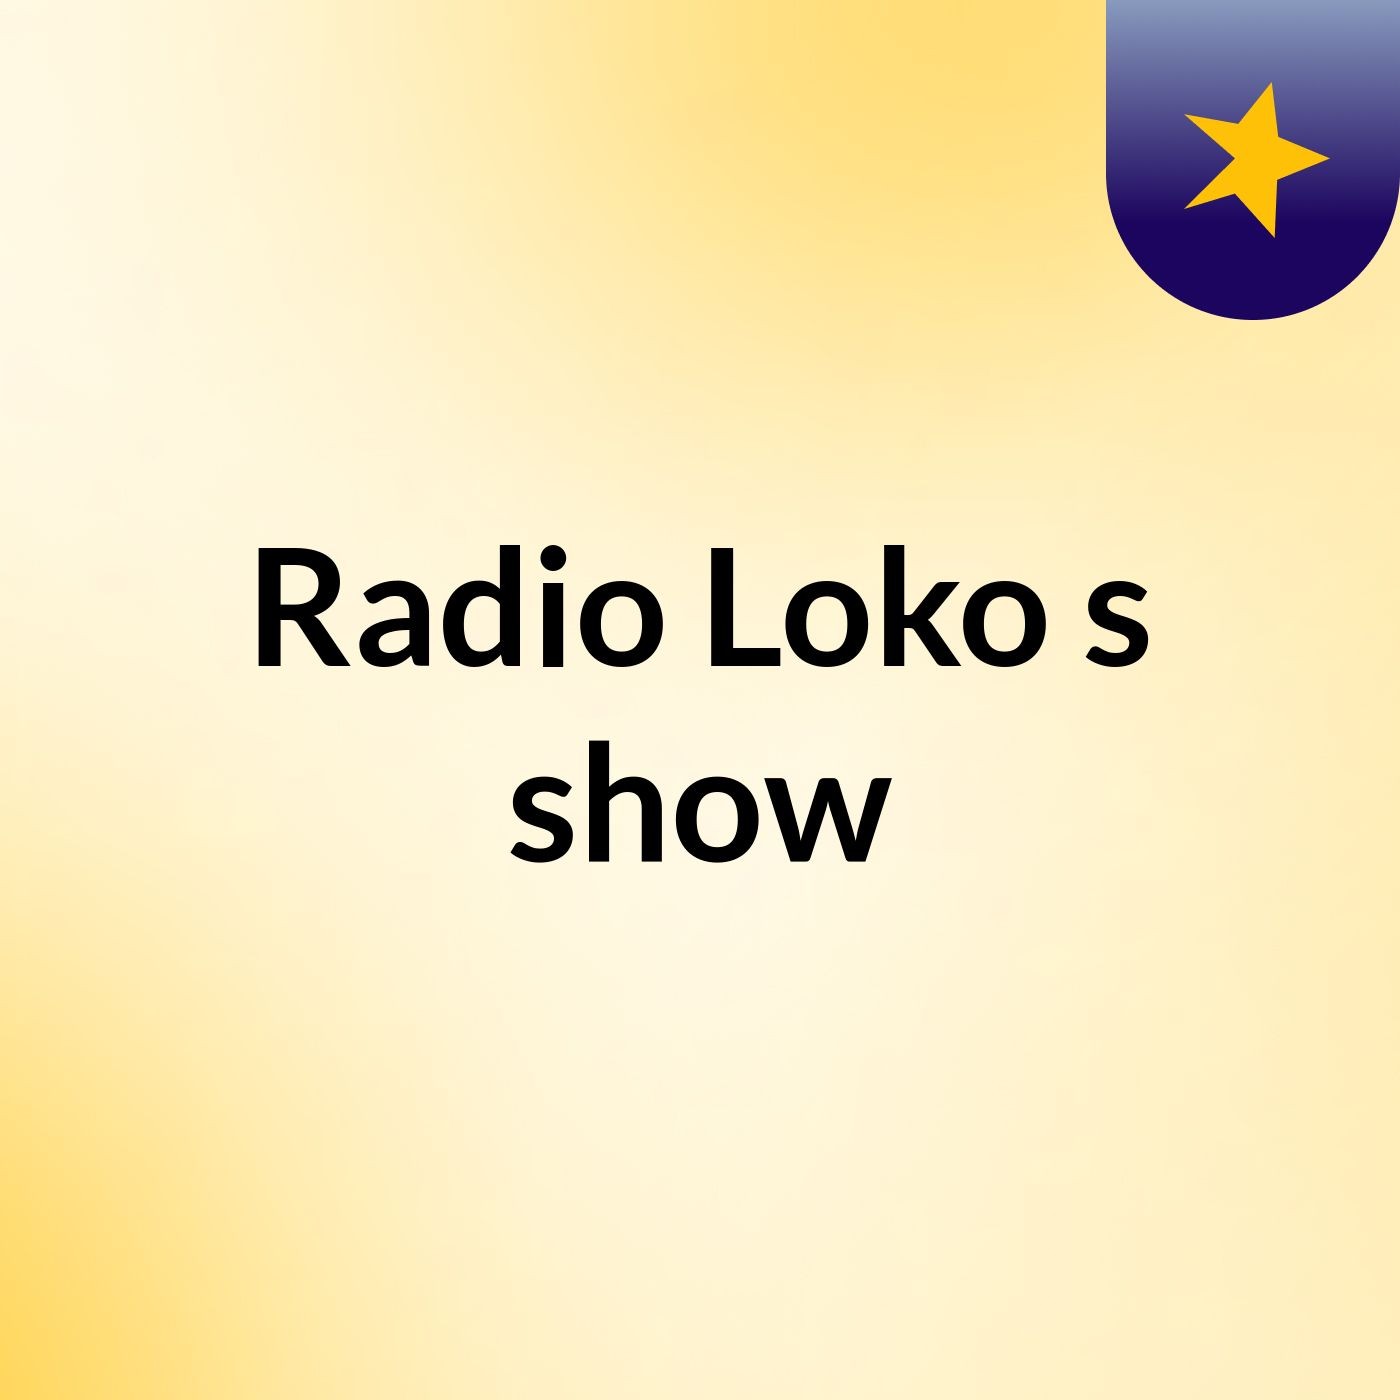 Radio Loko's show